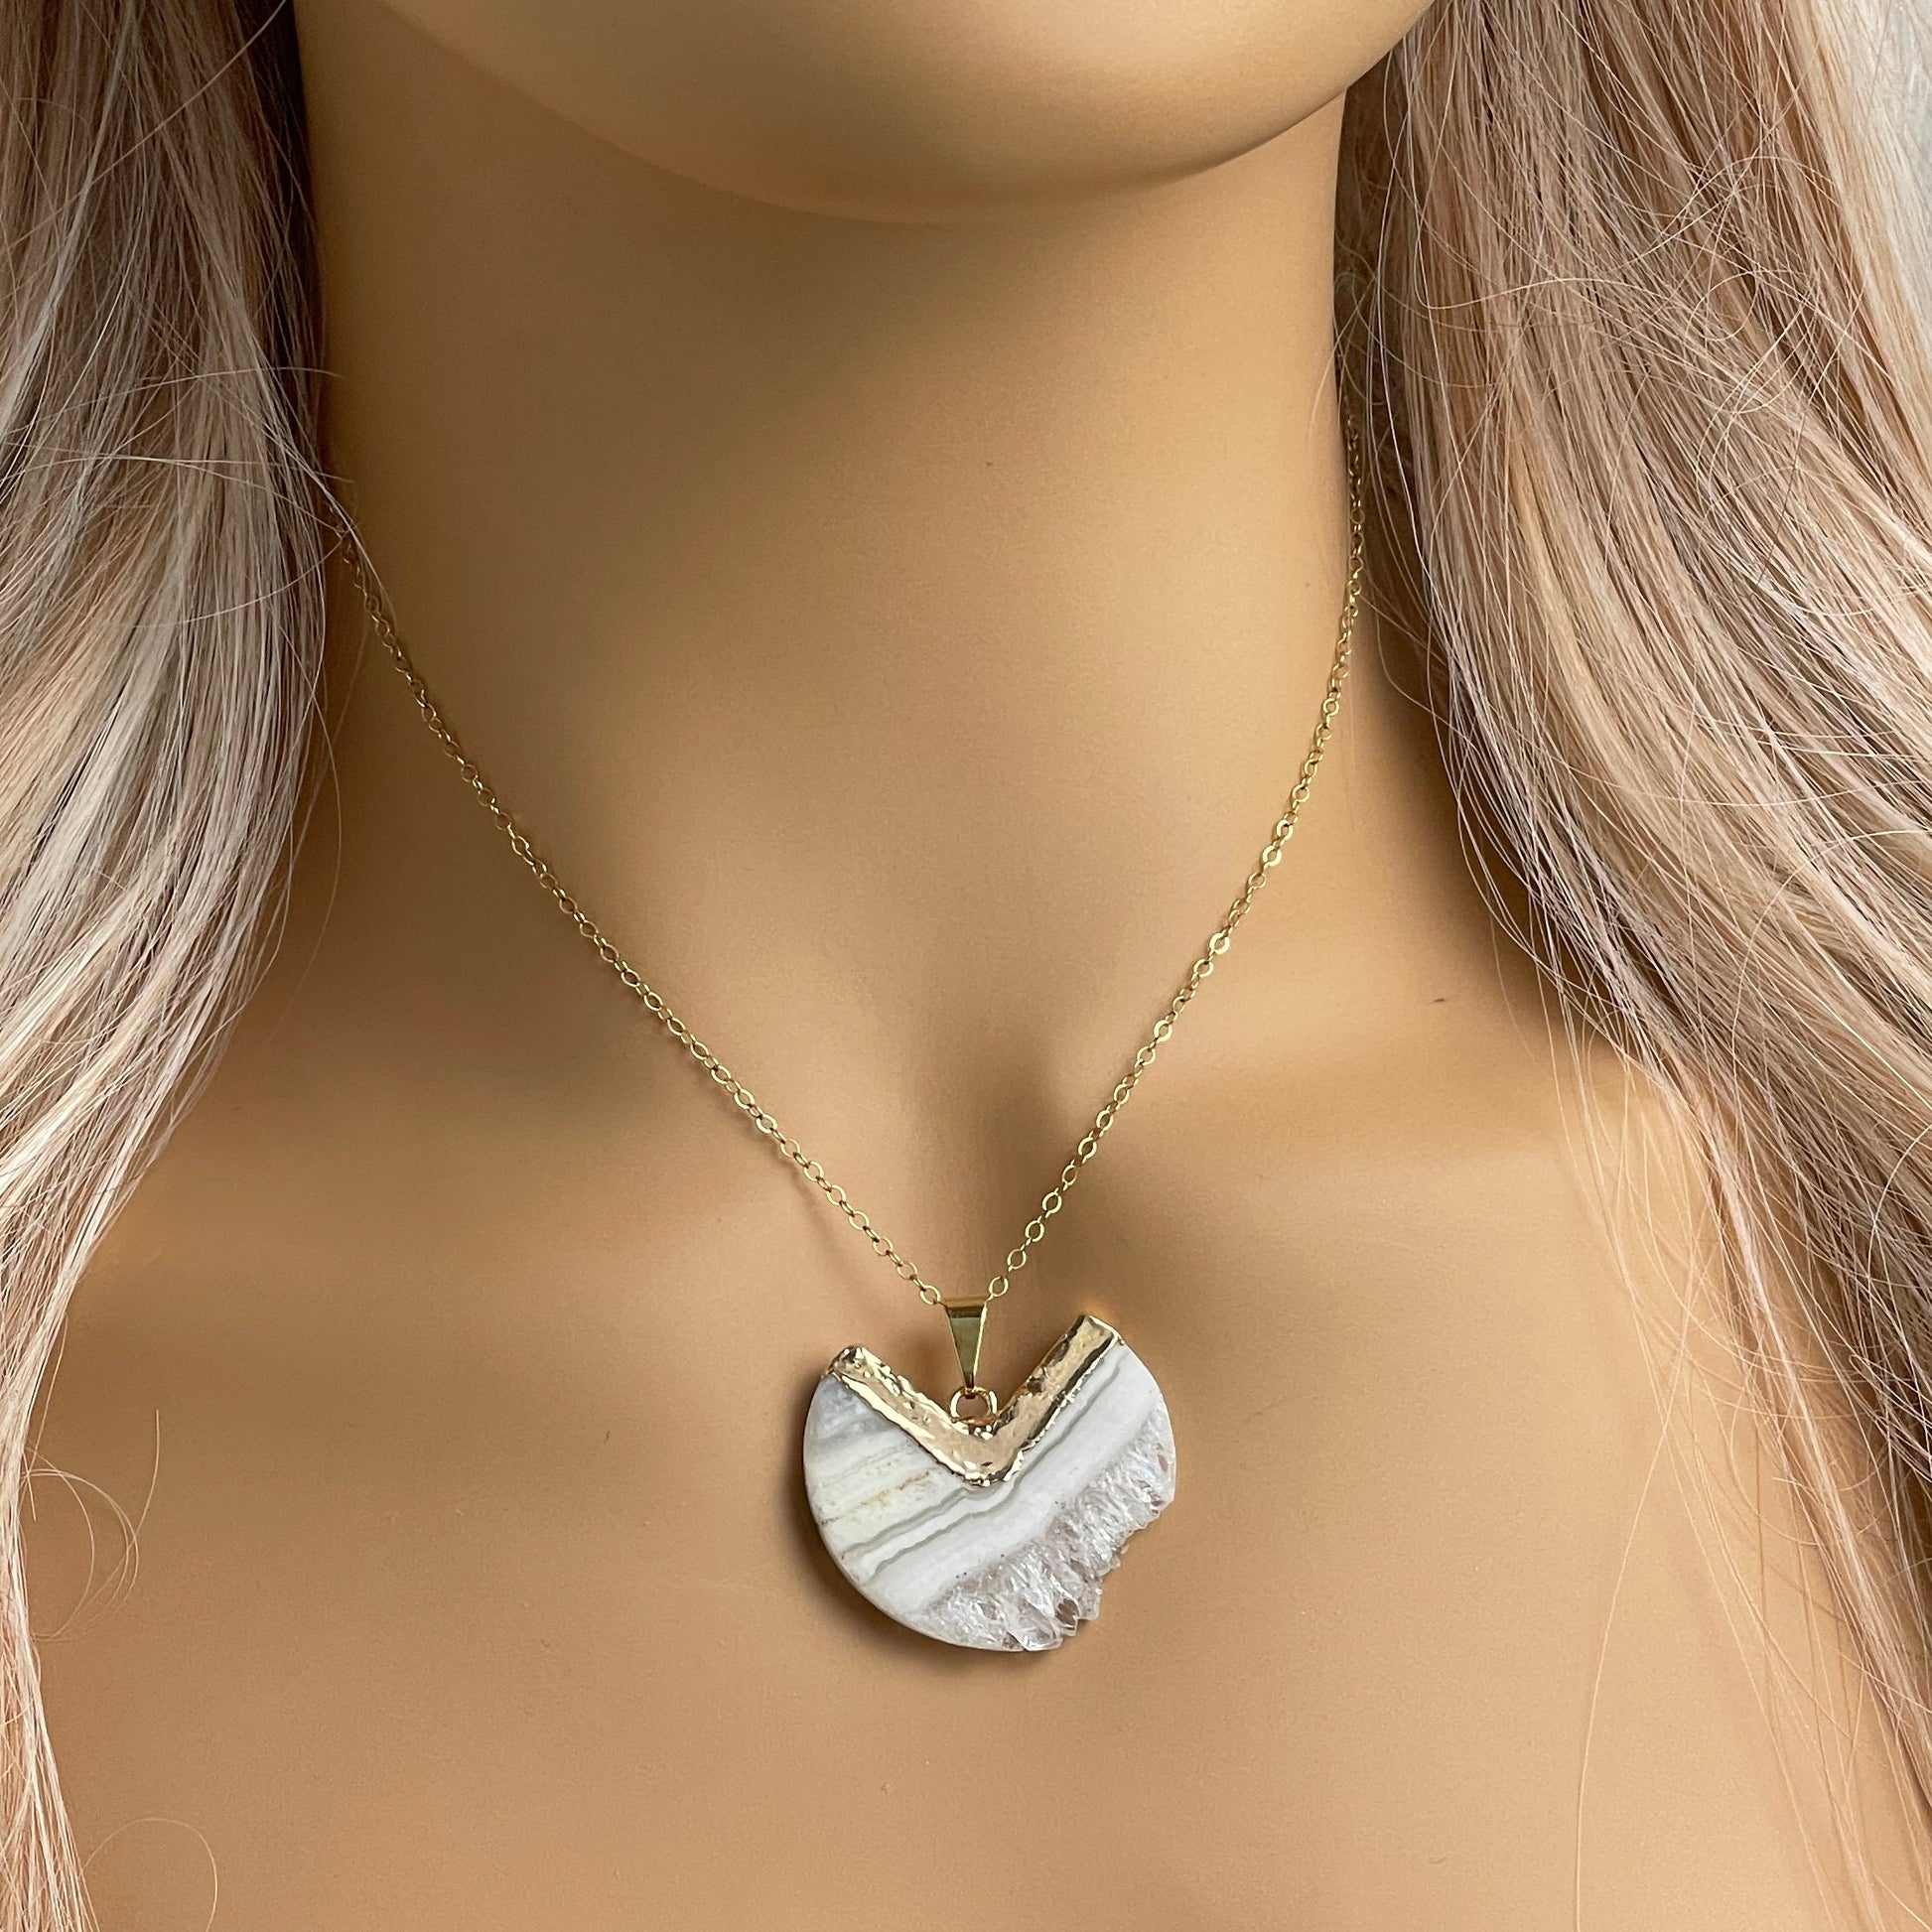 Unique White Amethyst Gemstone Necklace Gold, Boho Druzy Pendant, Mothers Day Gift, M7-40